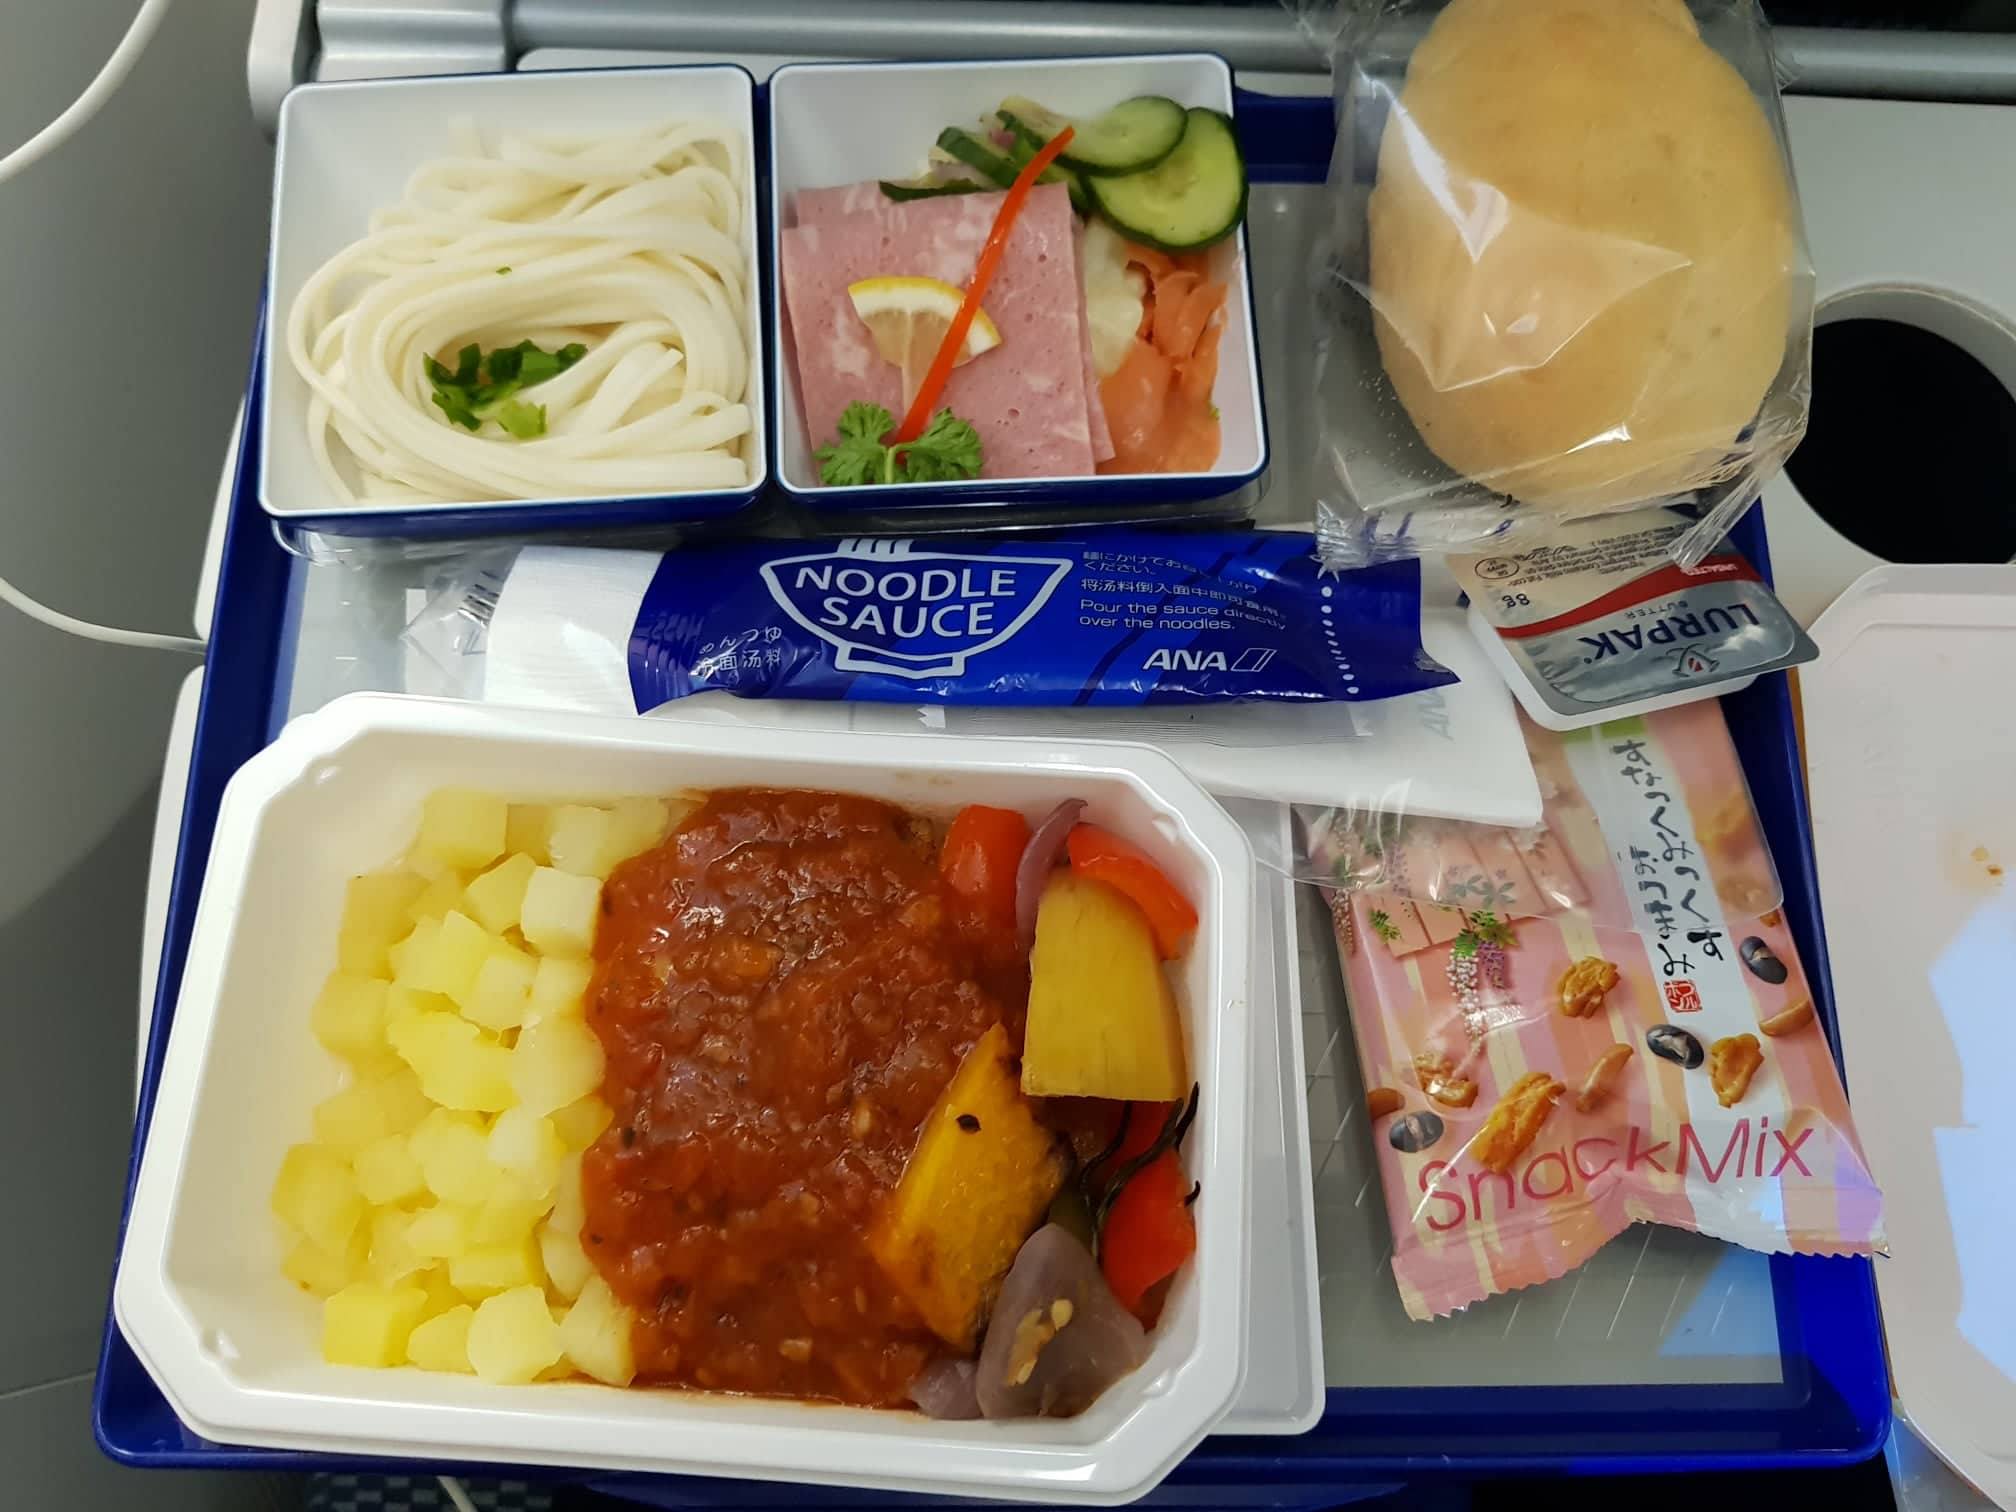 ANA 787 Economy Class food